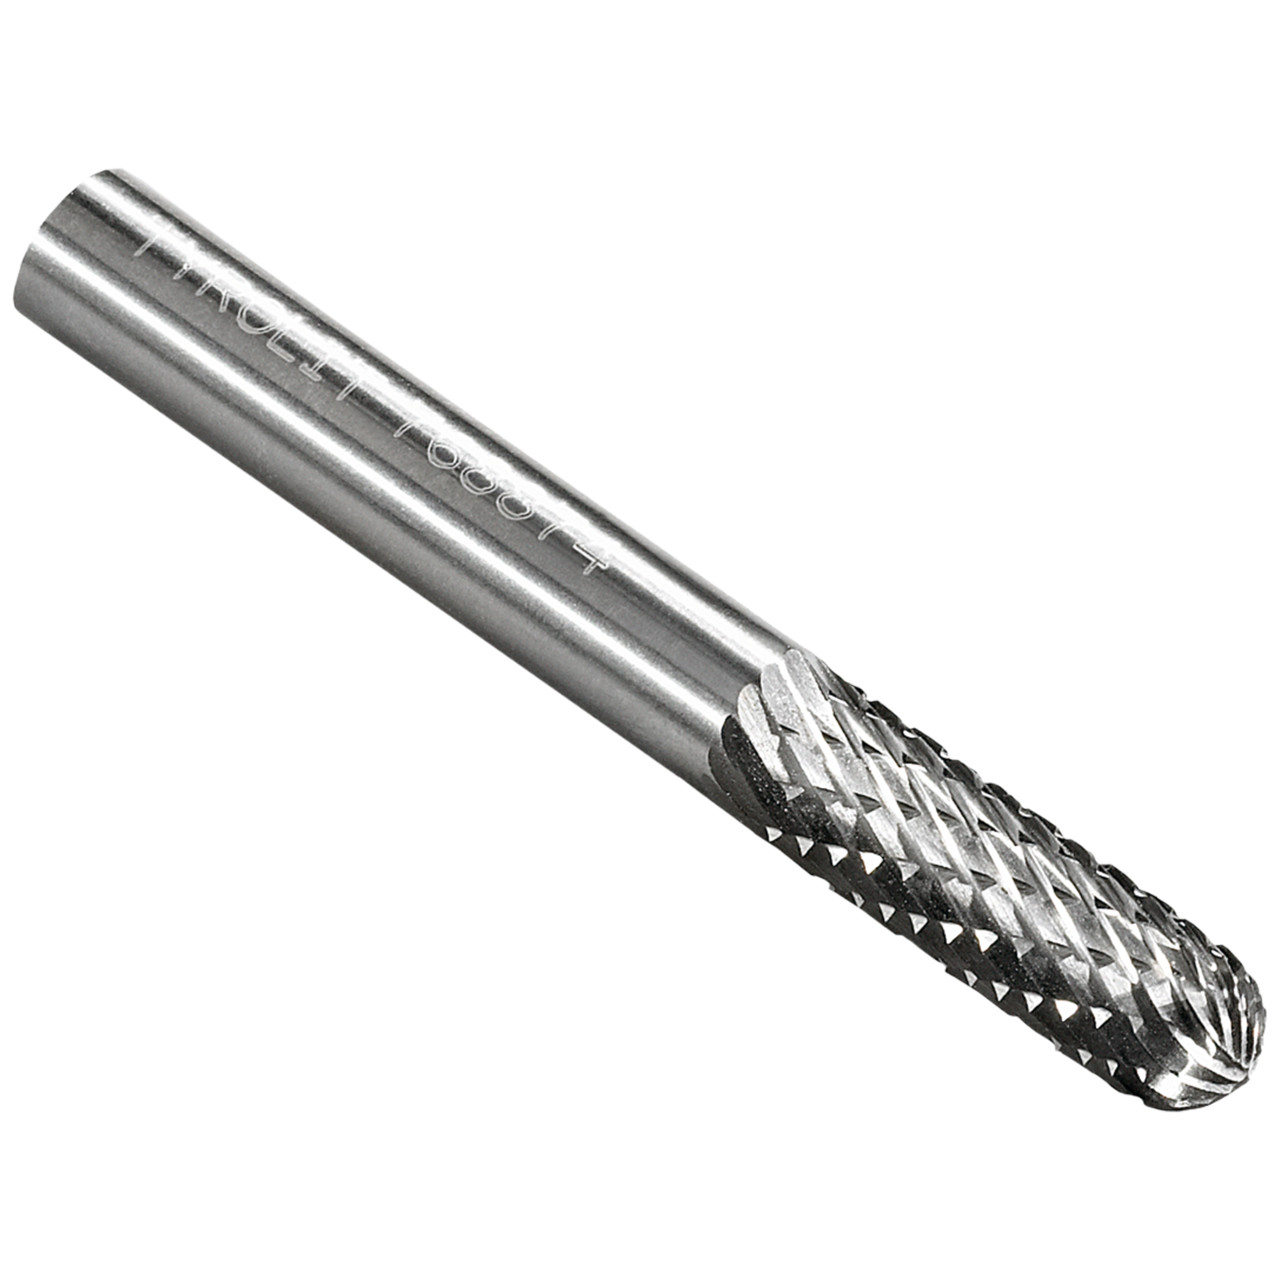 Fresa in metallo duro TYROLIT DxT-SxL 10x19-6x65 Per ghisa, acciaio e acciaio inox, forma: 52WRC - cilindrica, Art. 768881